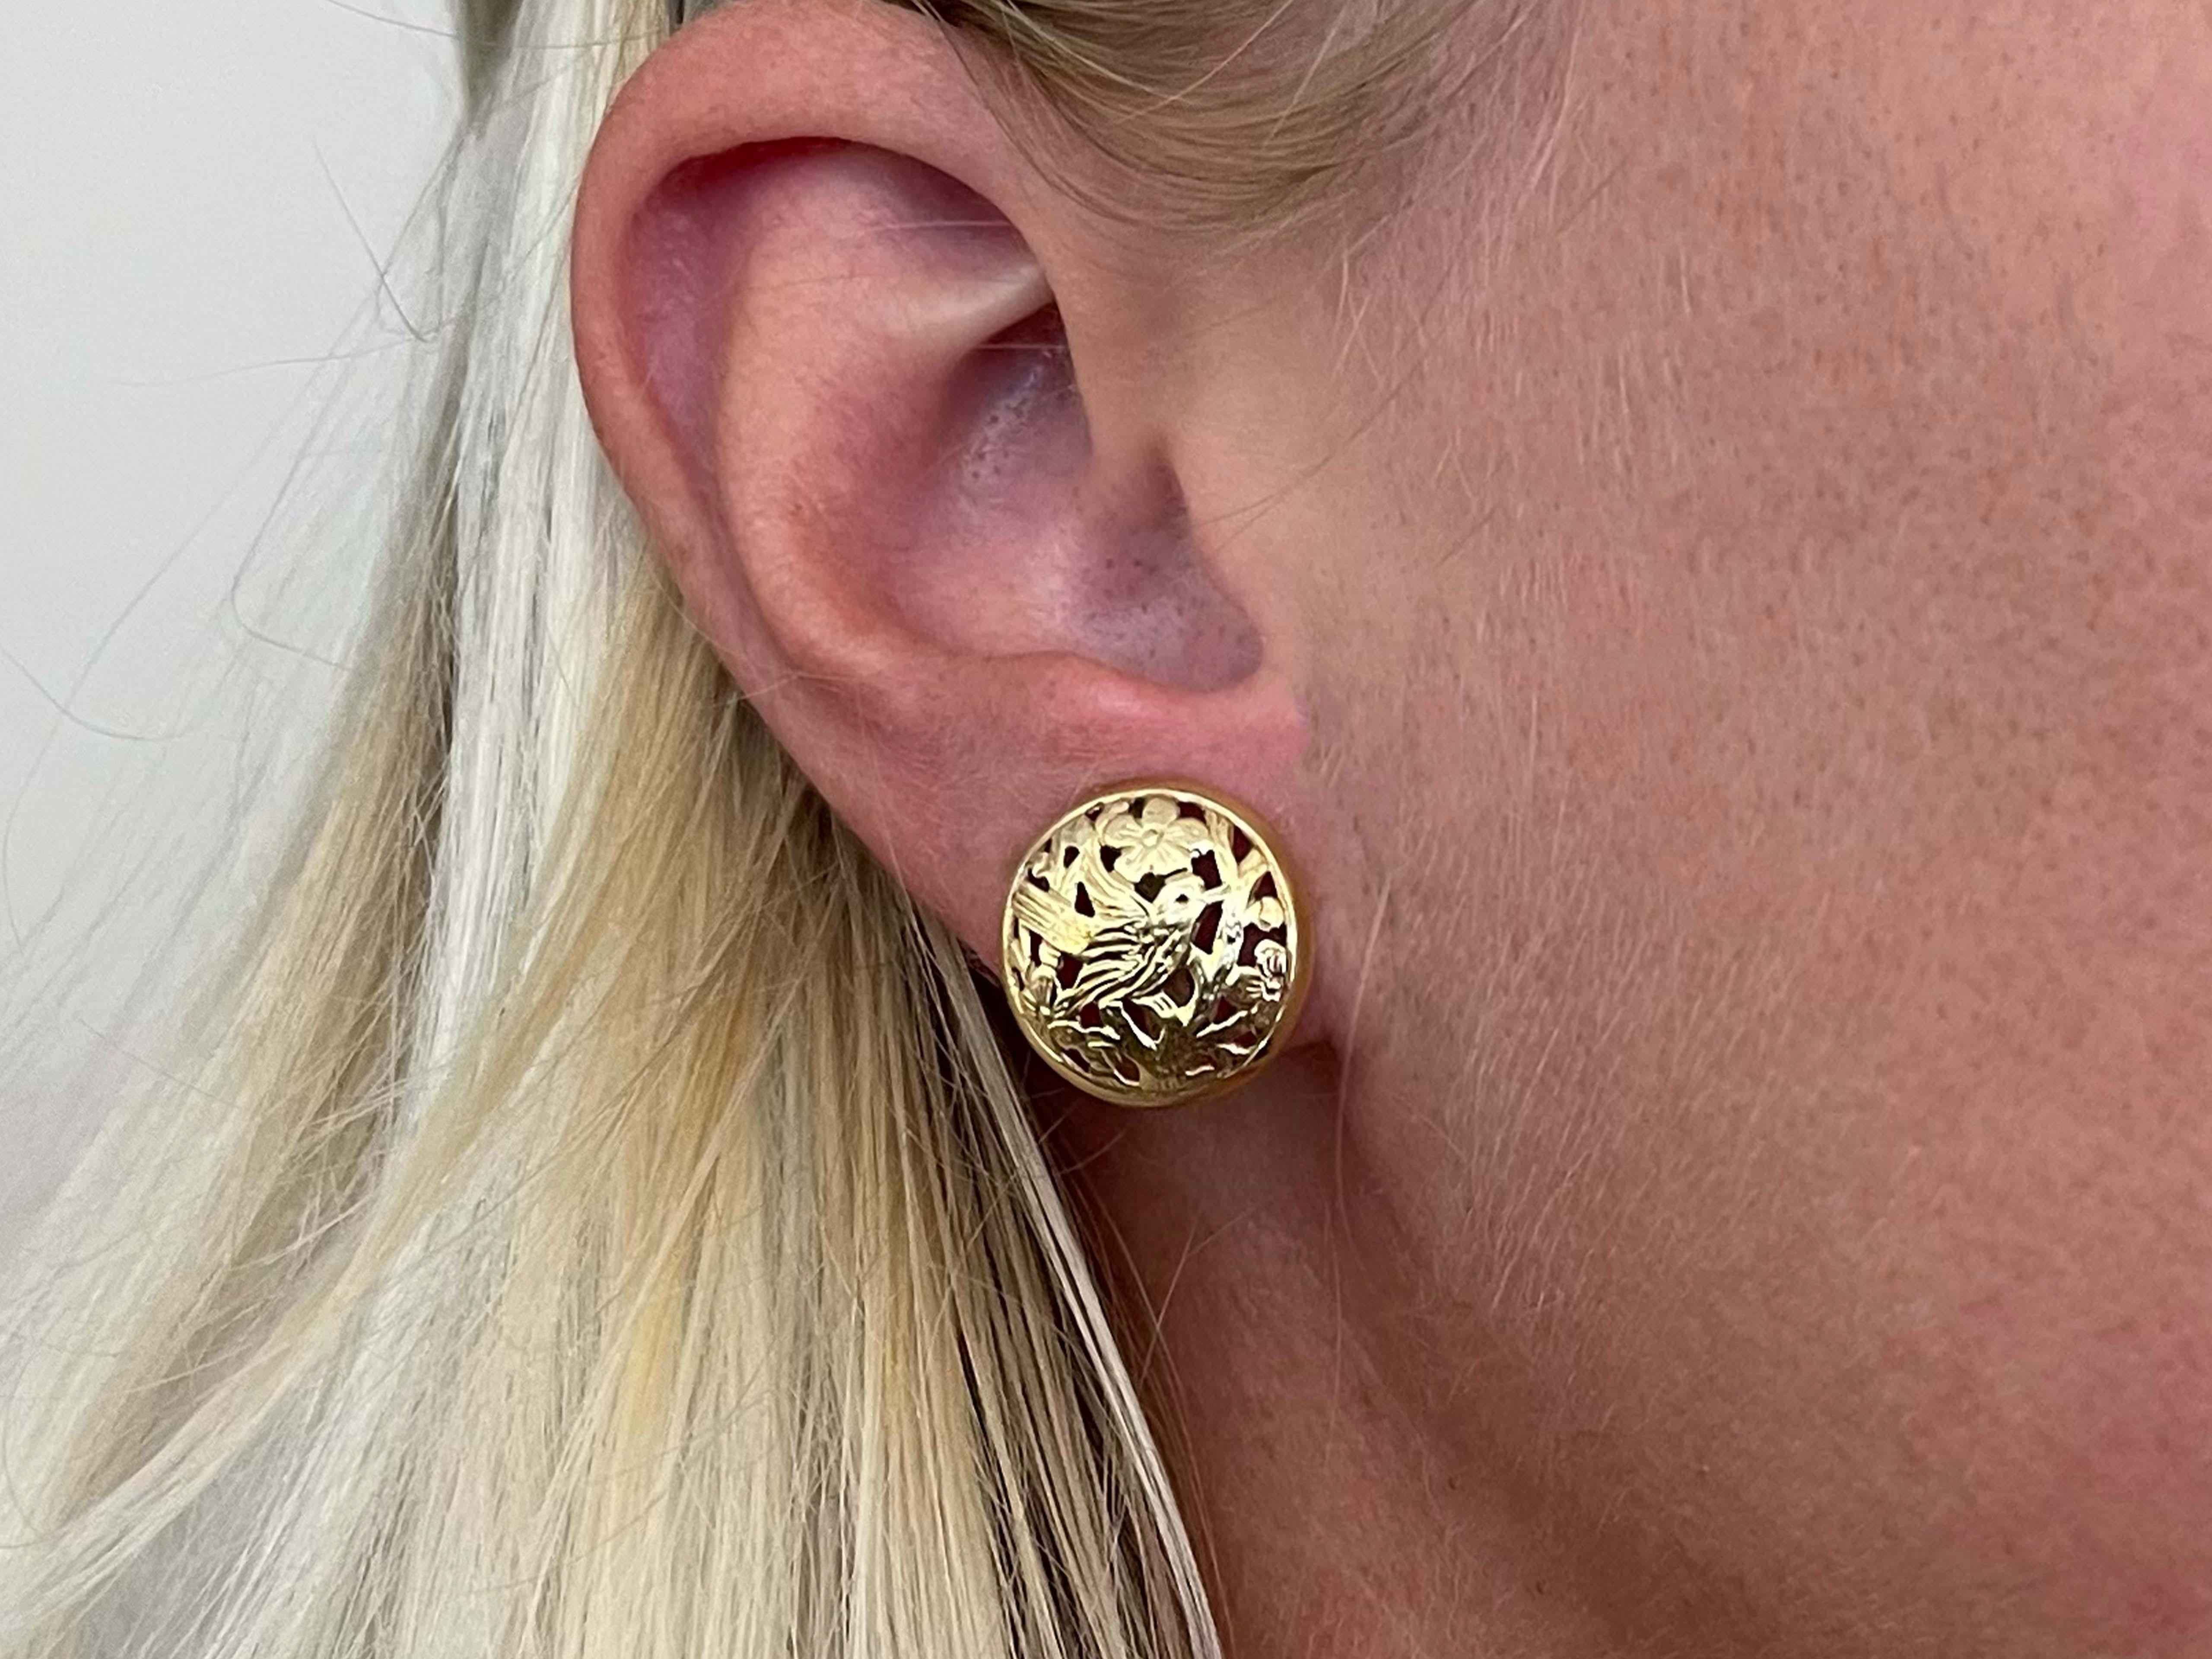 Earrings Specifications:

Designer: Ming's

Metal: 14K Yellow Gold

Total Weight: 4.1 Grams

Earring Diameter: 16 mm

Stamped: 